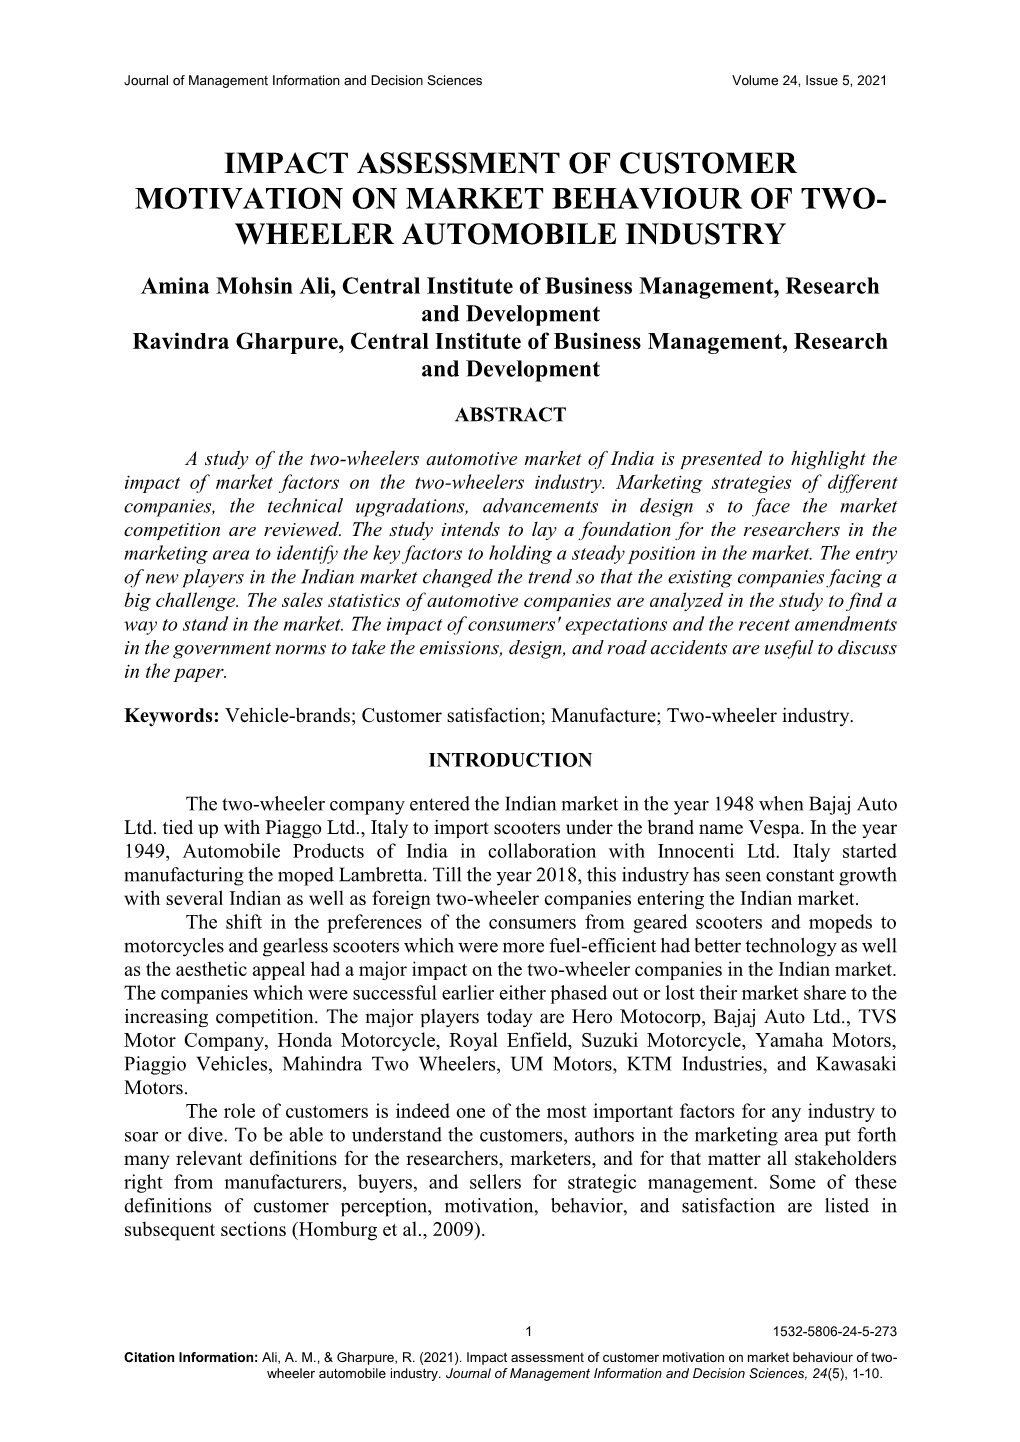 Wheeler Automobile Industry